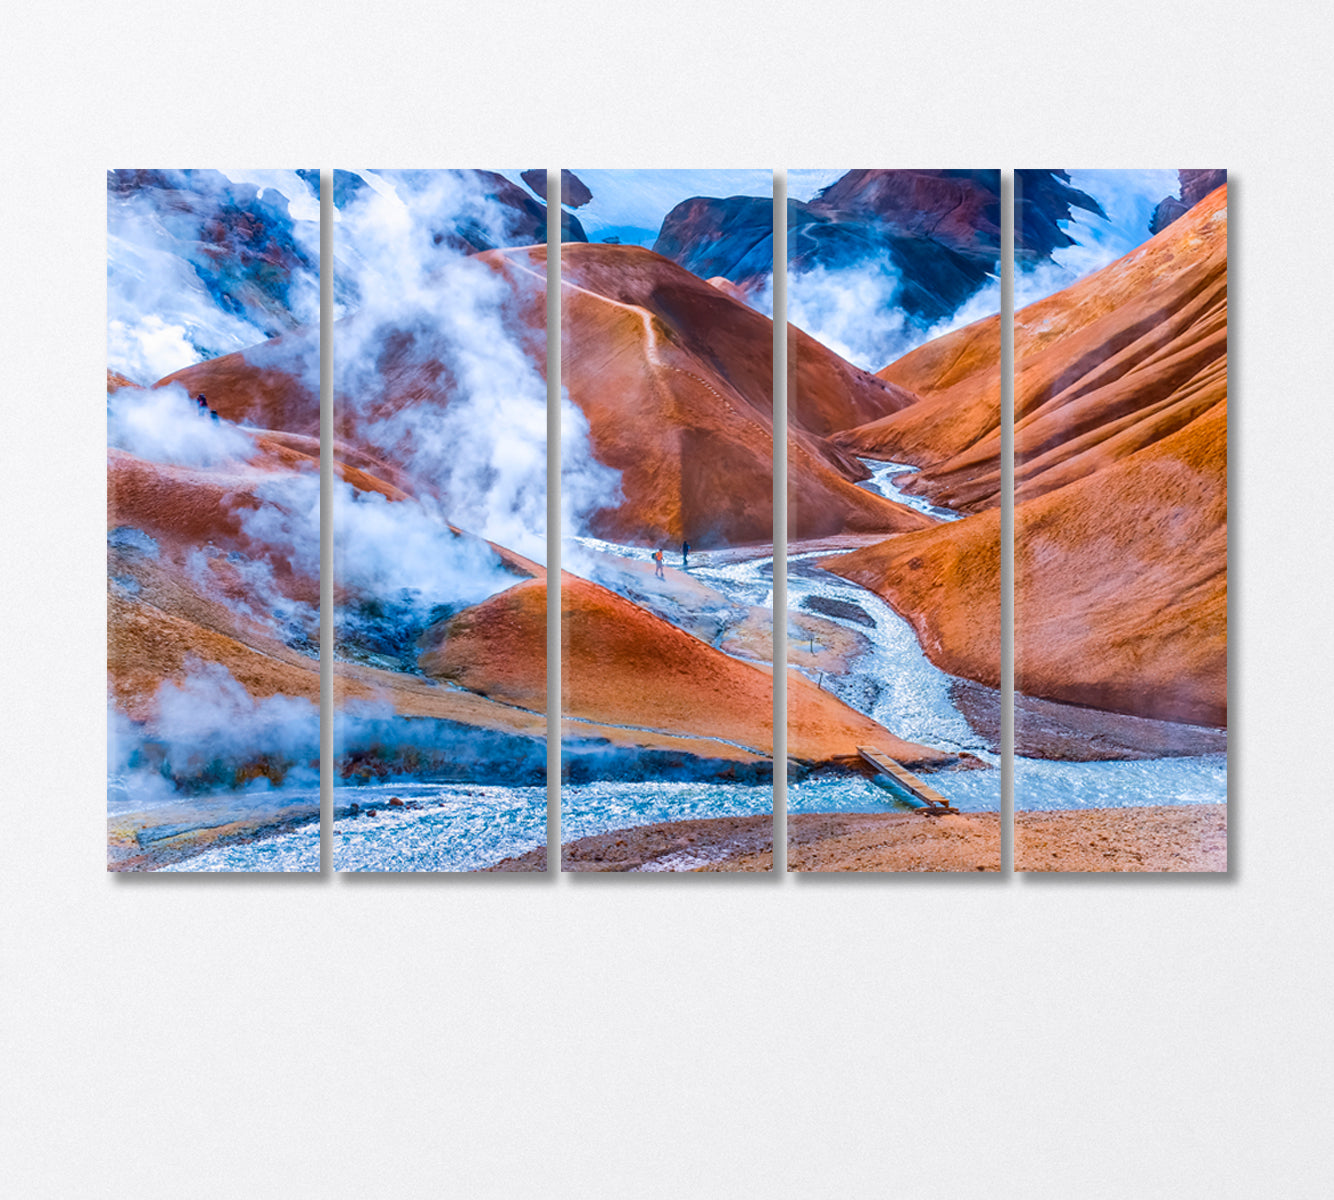 Geothermal Valley in Kerlingarfjoll Iceland Canvas Print-Canvas Print-CetArt-5 Panels-36x24 inches-CetArt